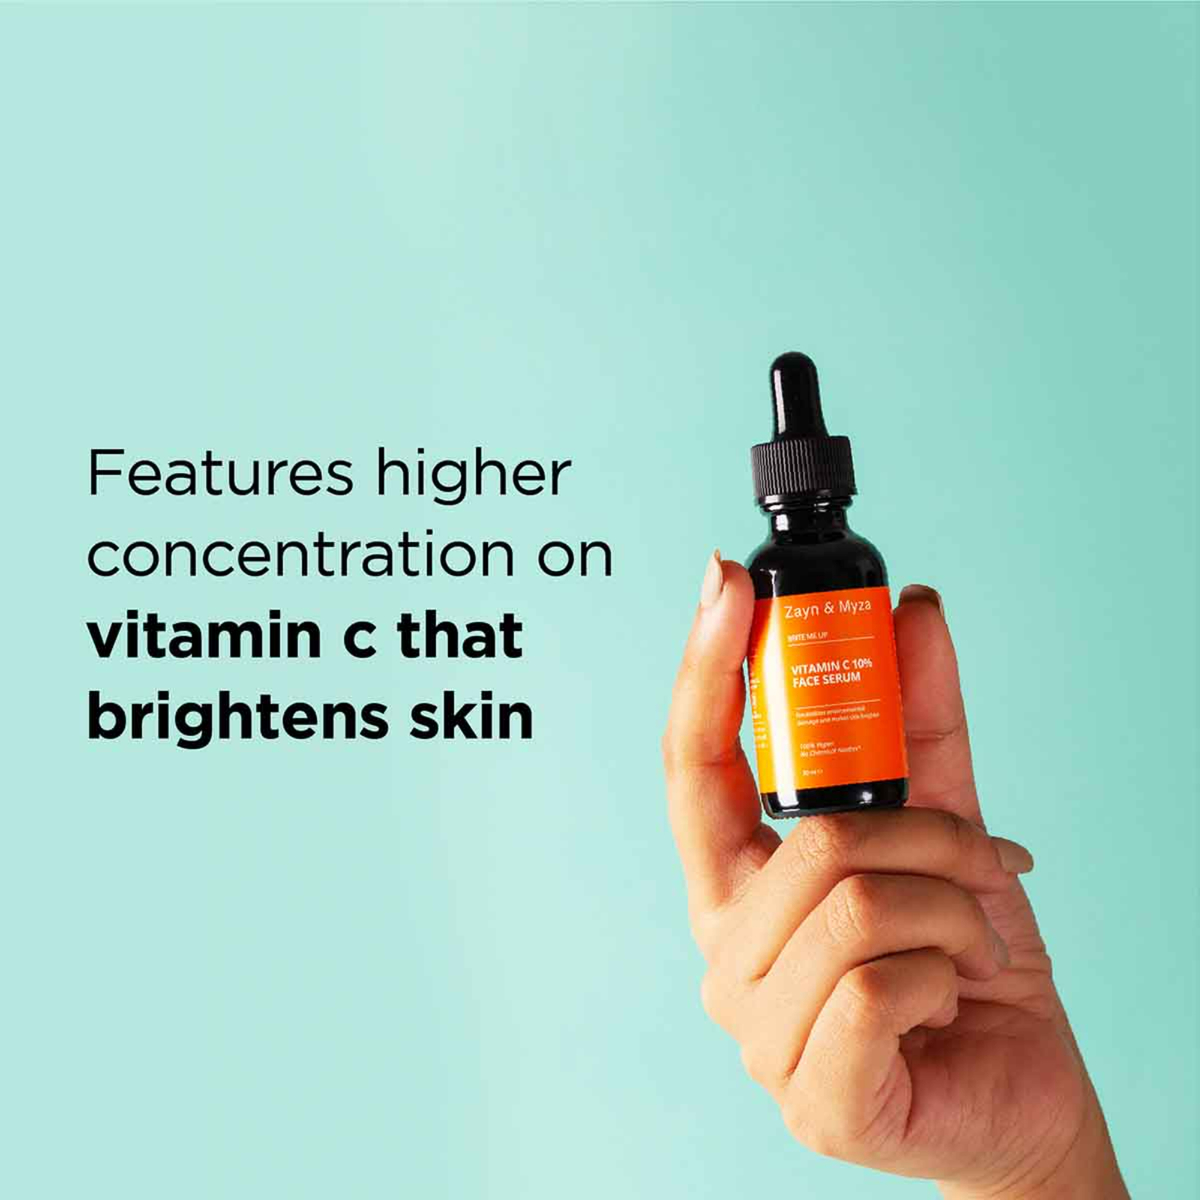 Zayn & Myza Brite Me Up Vitamin C 10% Face Serum, Neutralizes Environmental Damage and Makes Skin Brighter, 30 ml